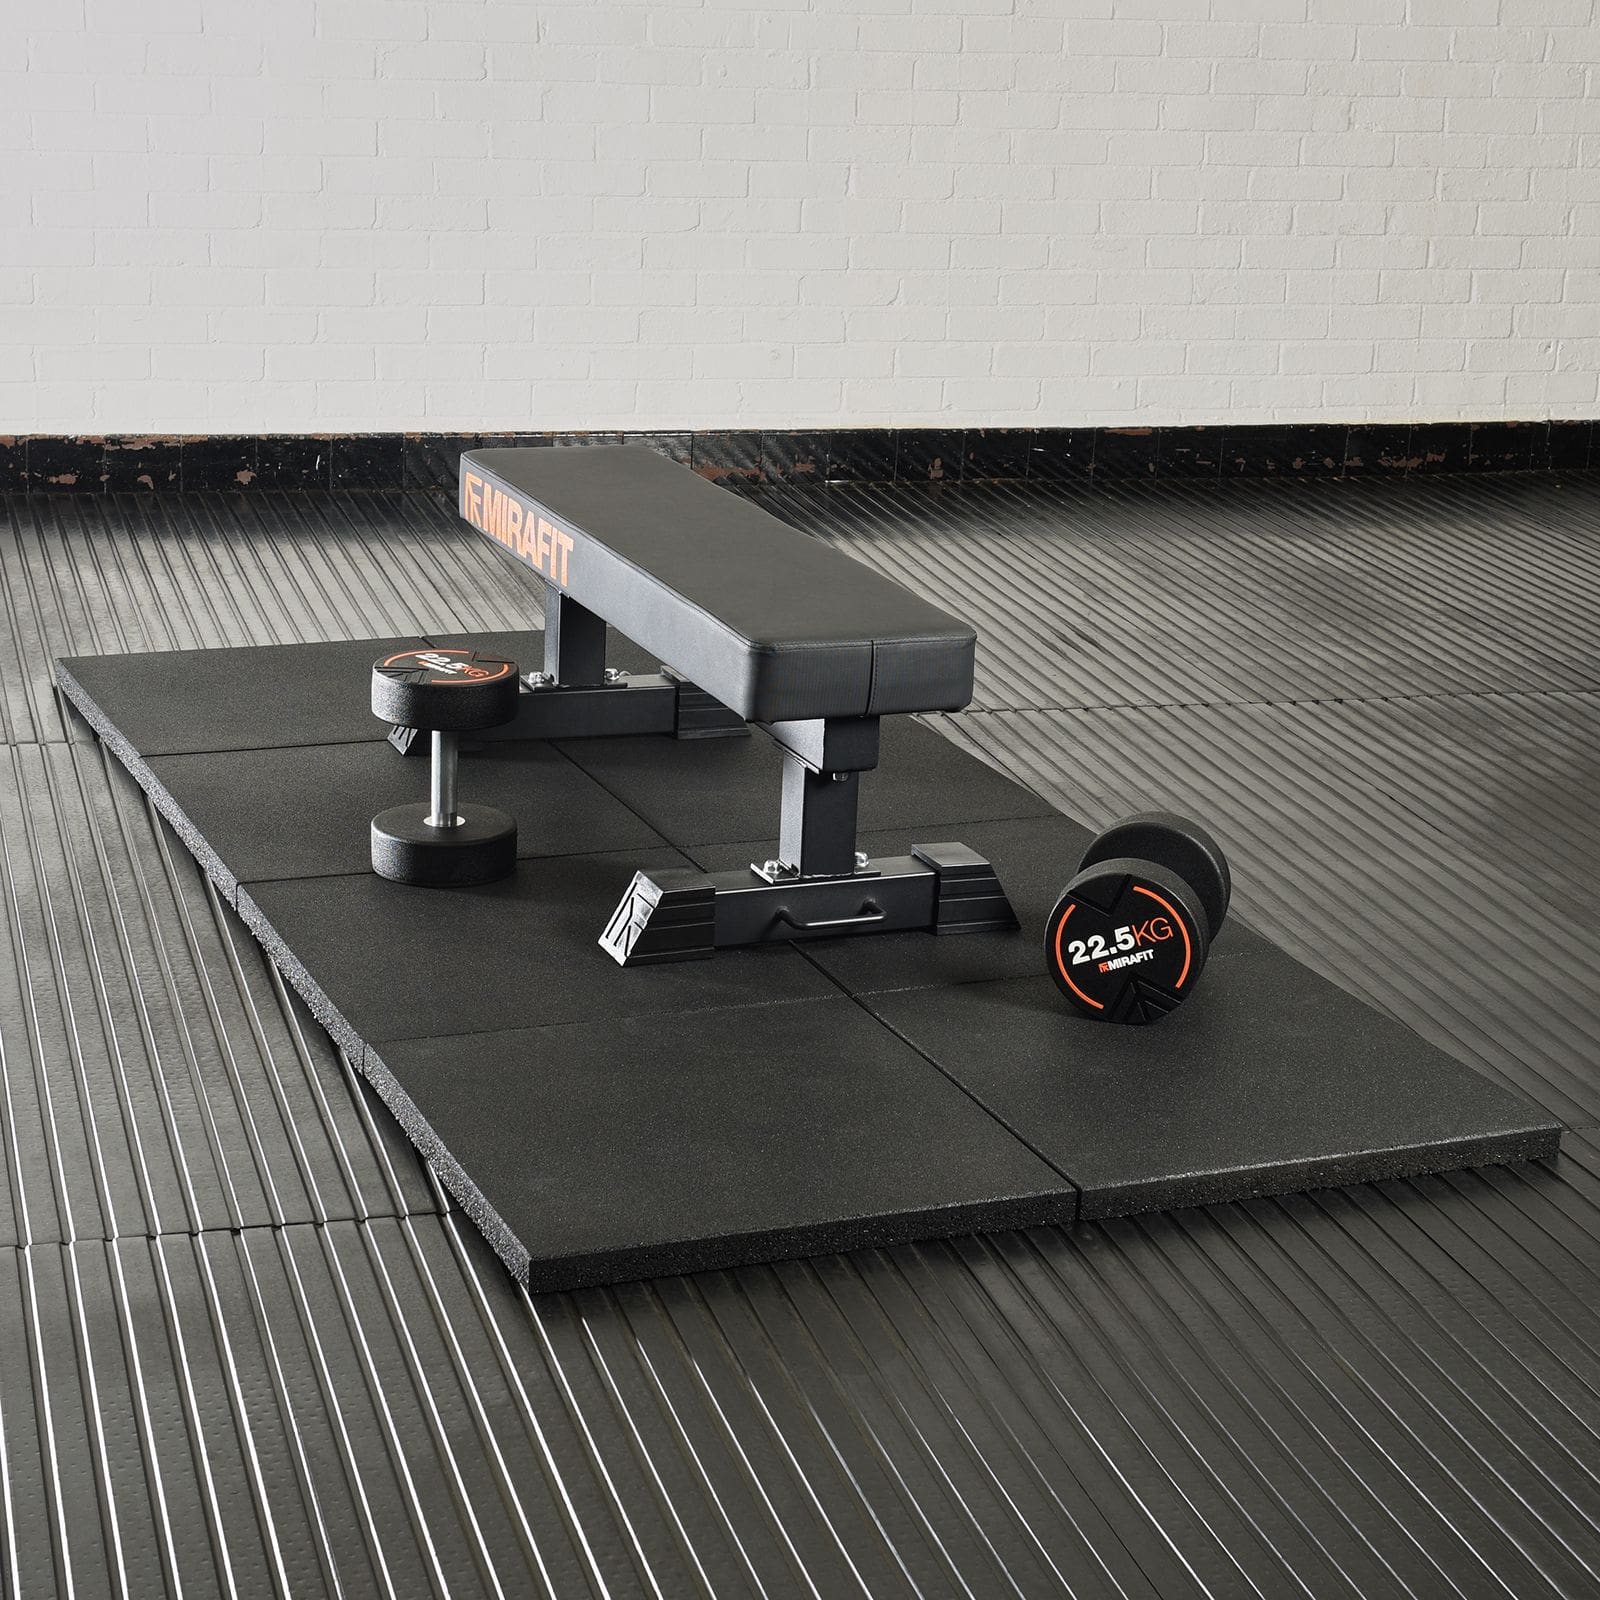 Mirafit 40mm Thick Rubber Gym Flooring Mats Review